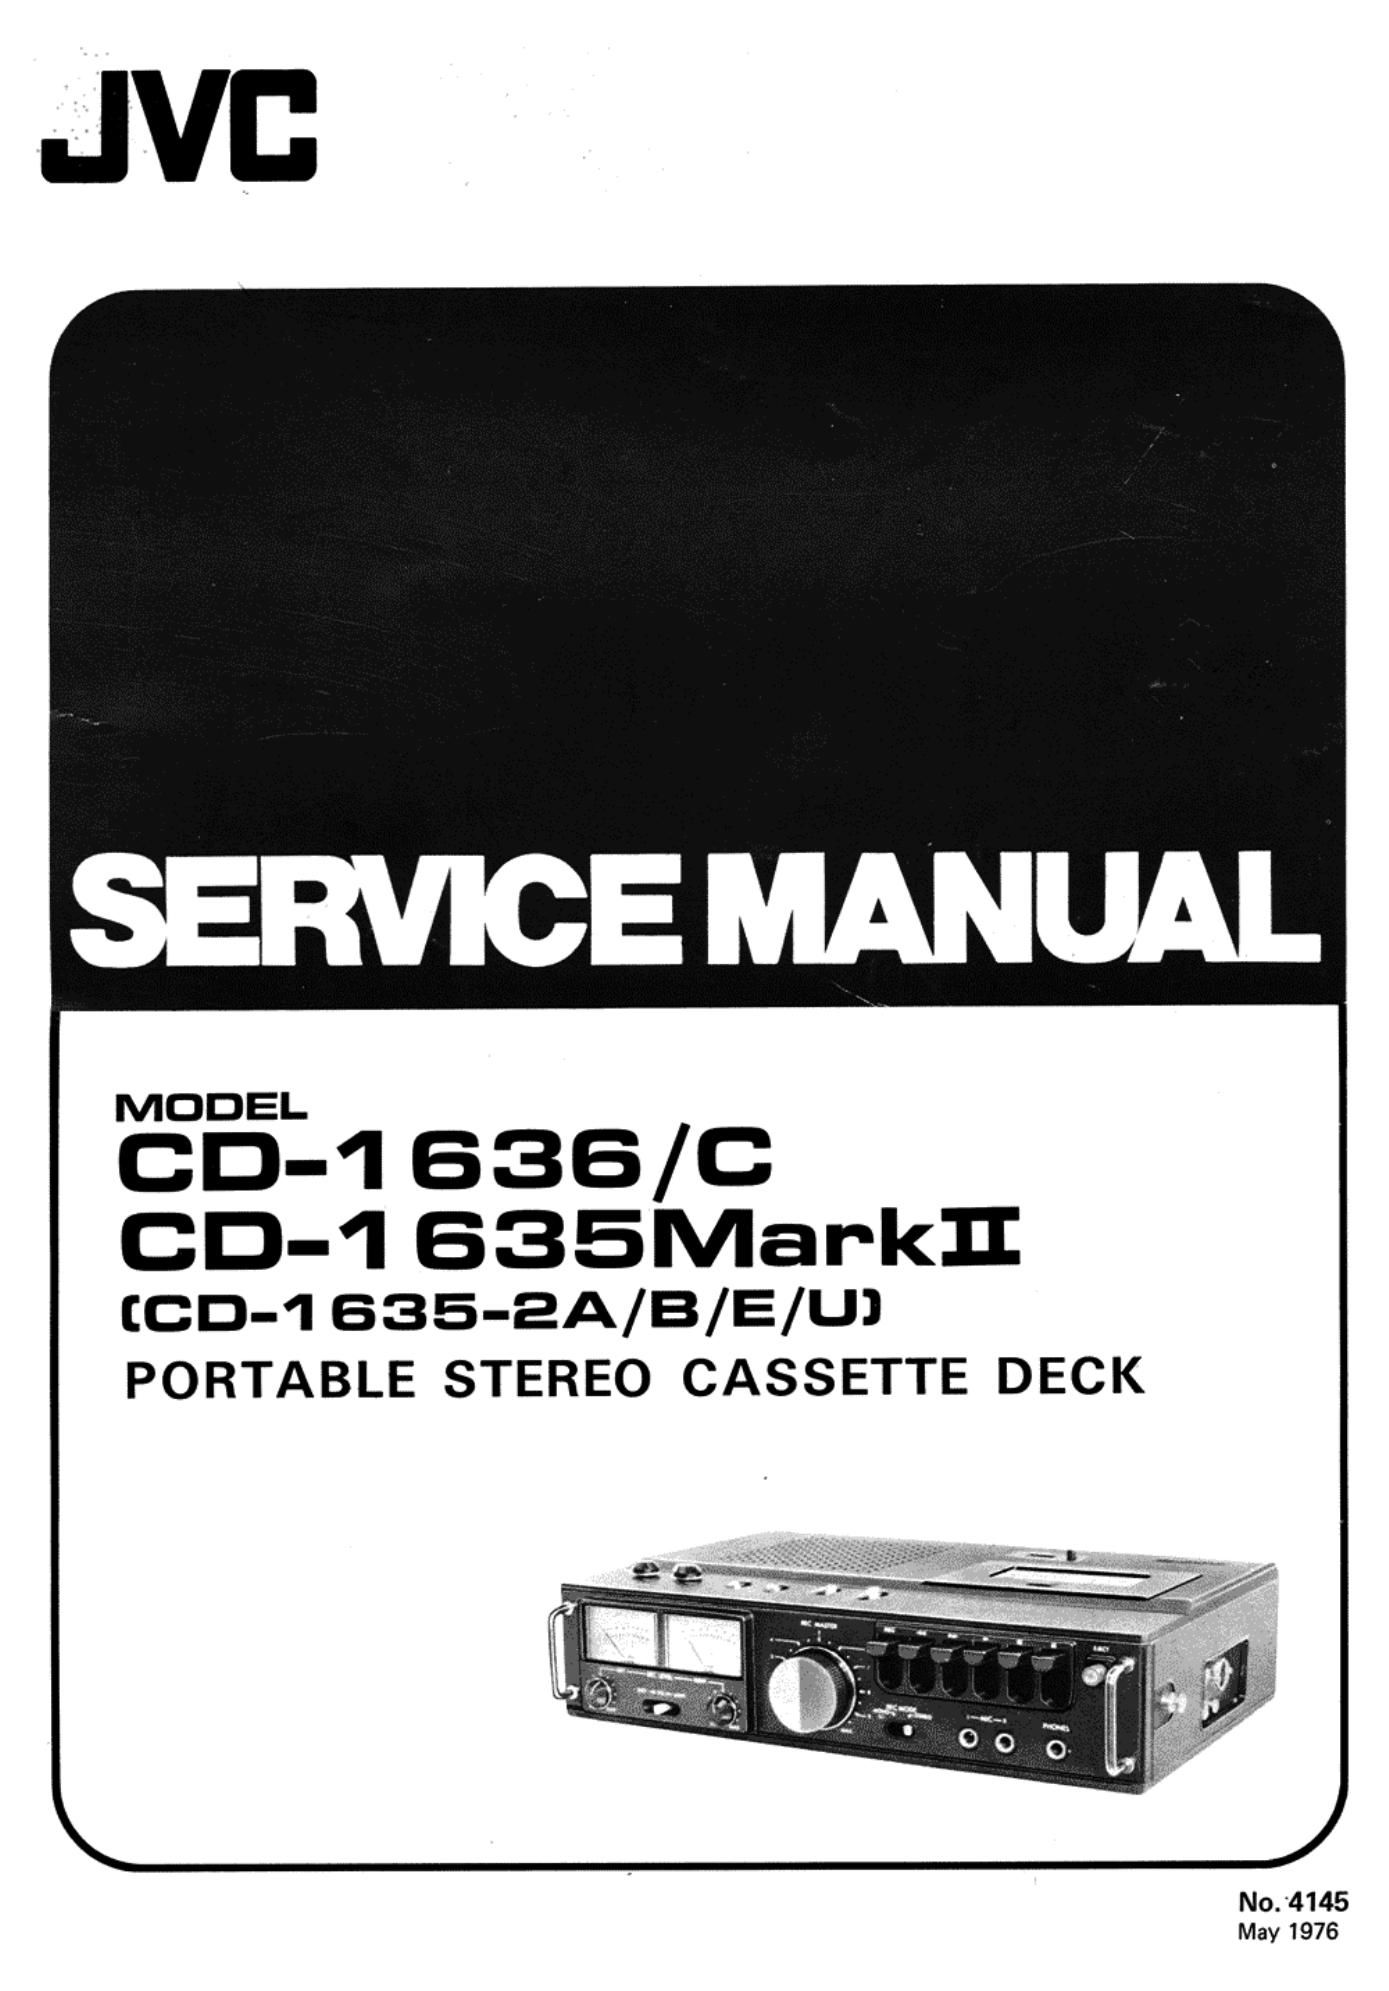 Jvc CD 1635 Service Manual